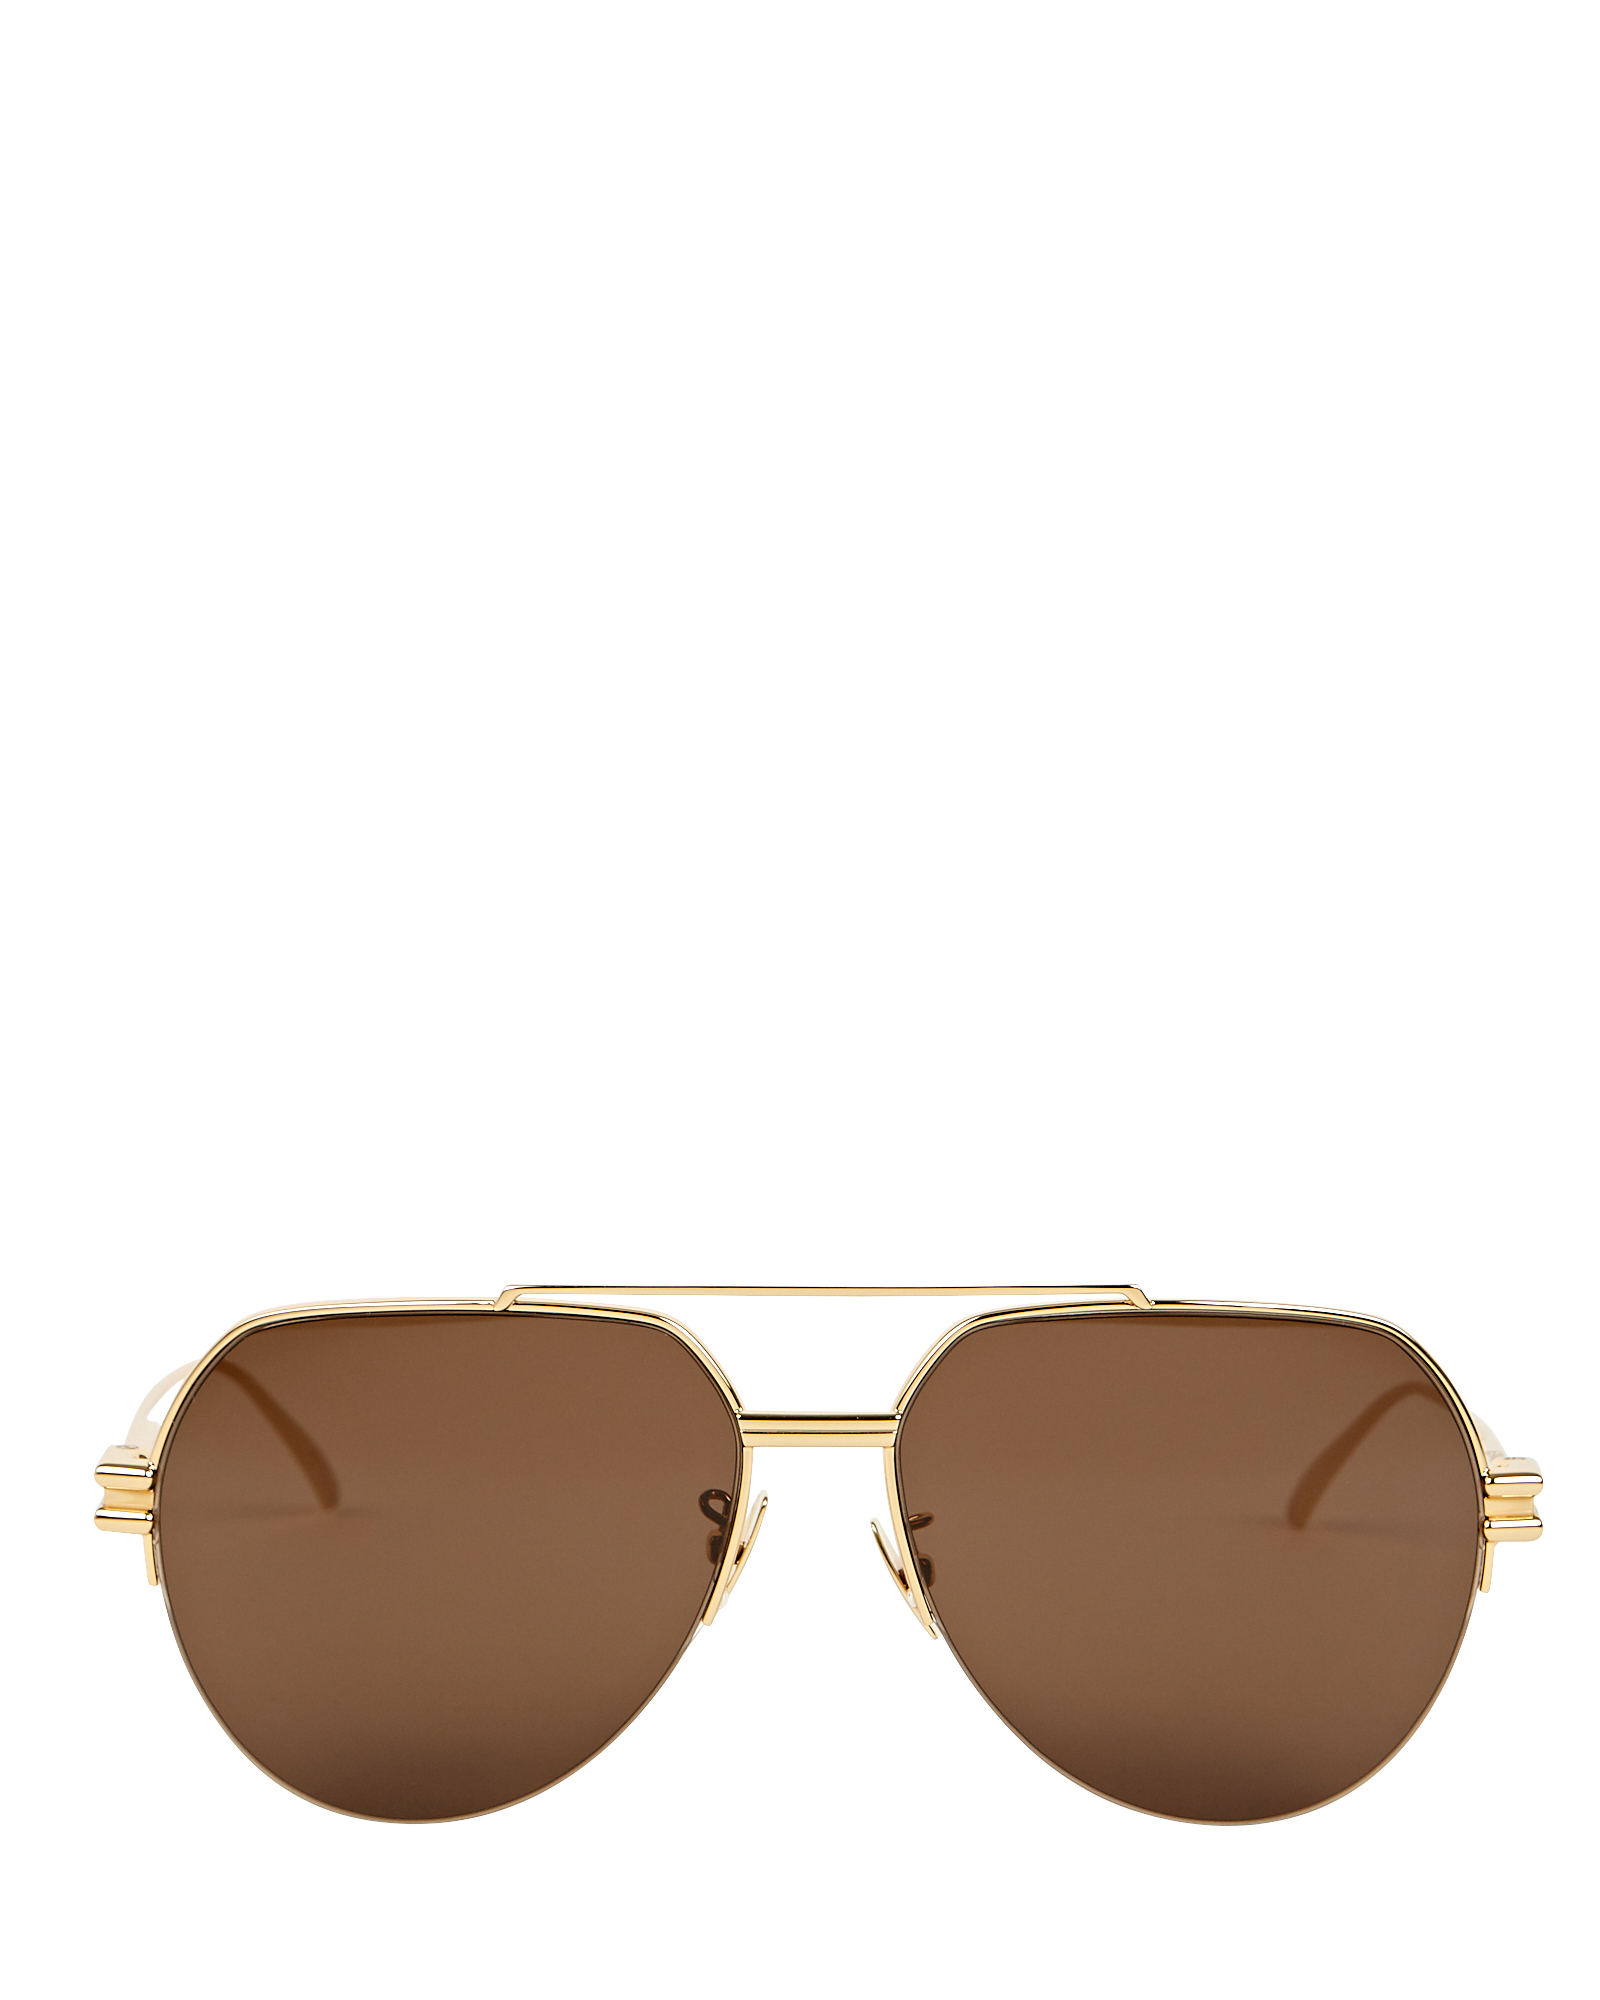 Bottega Veneta Oversized Pilot Sunglasses | INTERMIX®